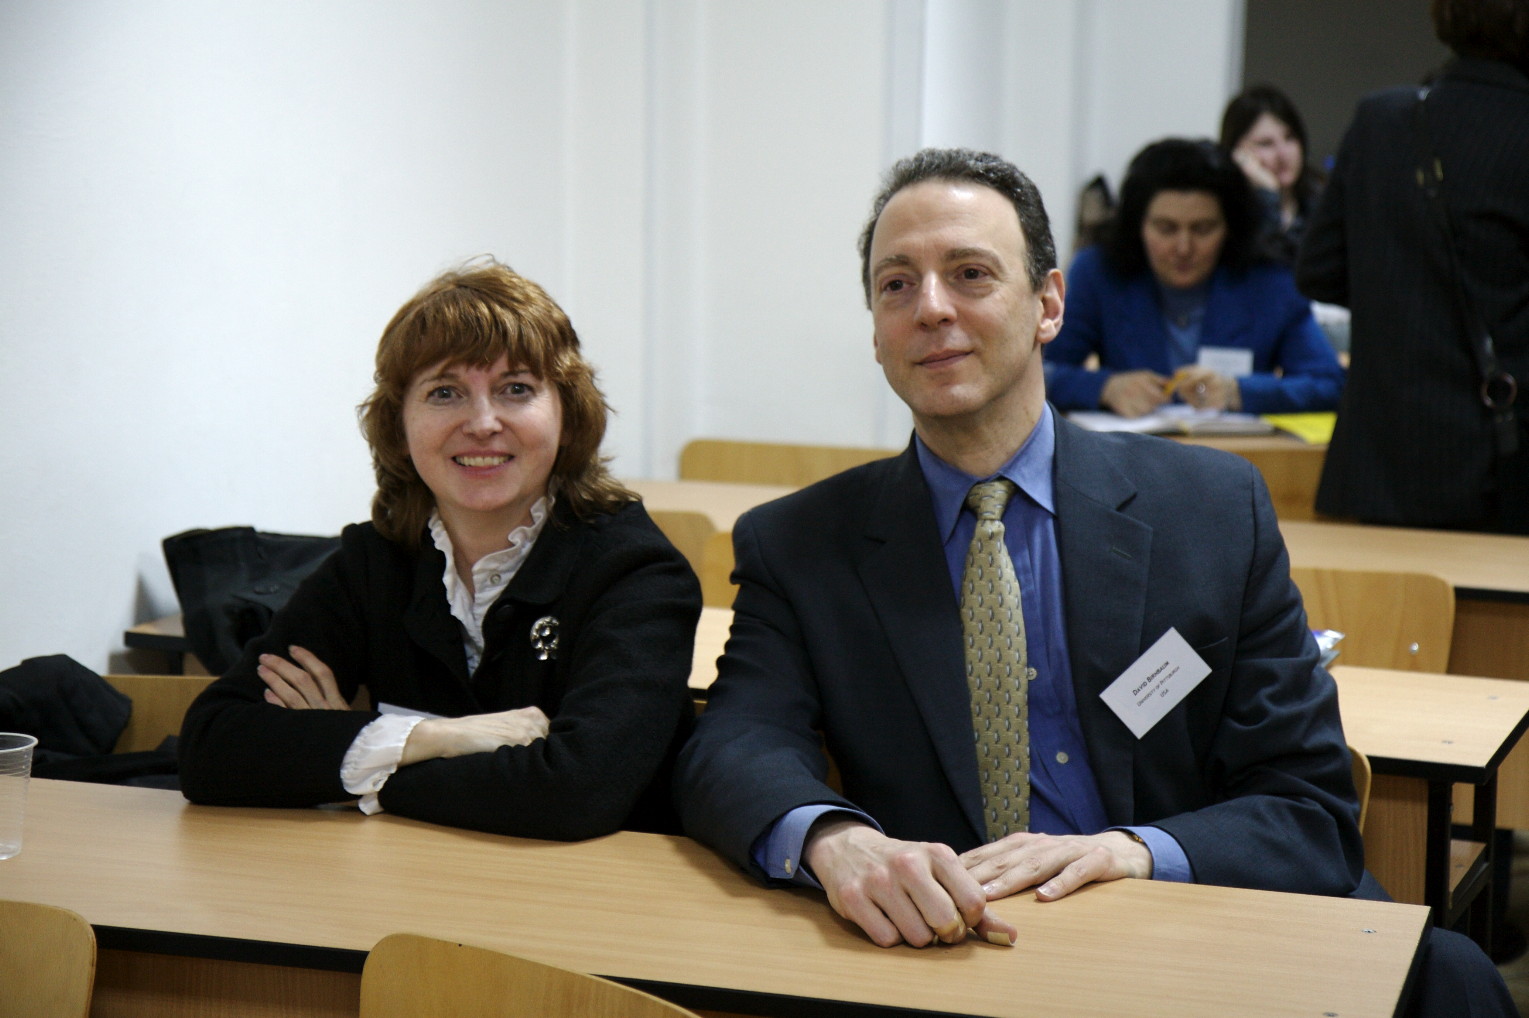 Prof. Cynthia Vakarelijska and Prof. David Birnbaum